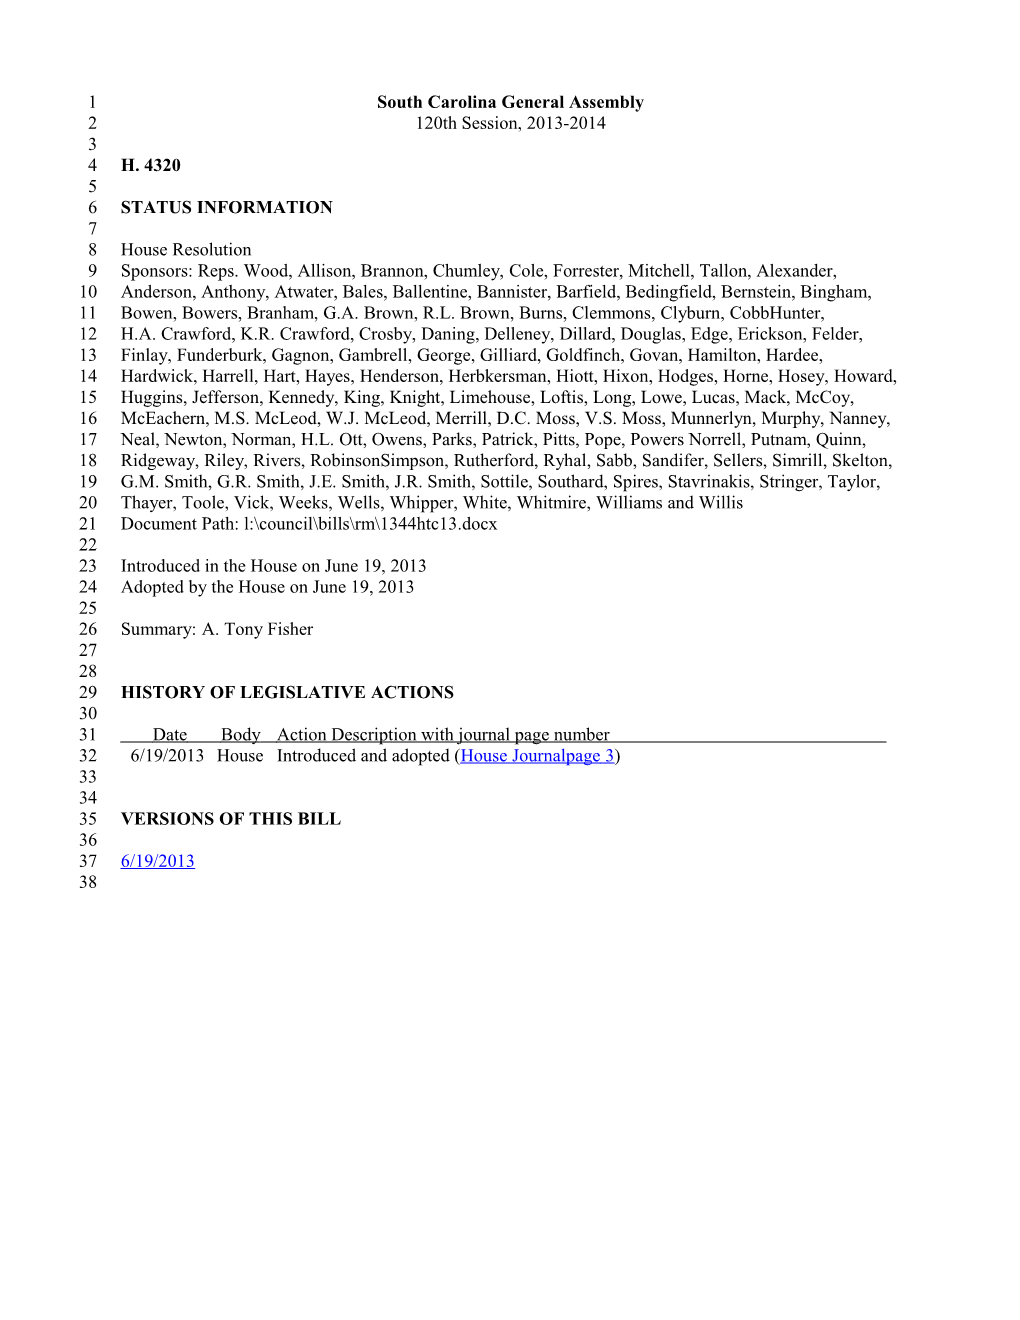 2013-2014 Bill 4320: A. Tony Fisher - South Carolina Legislature Online